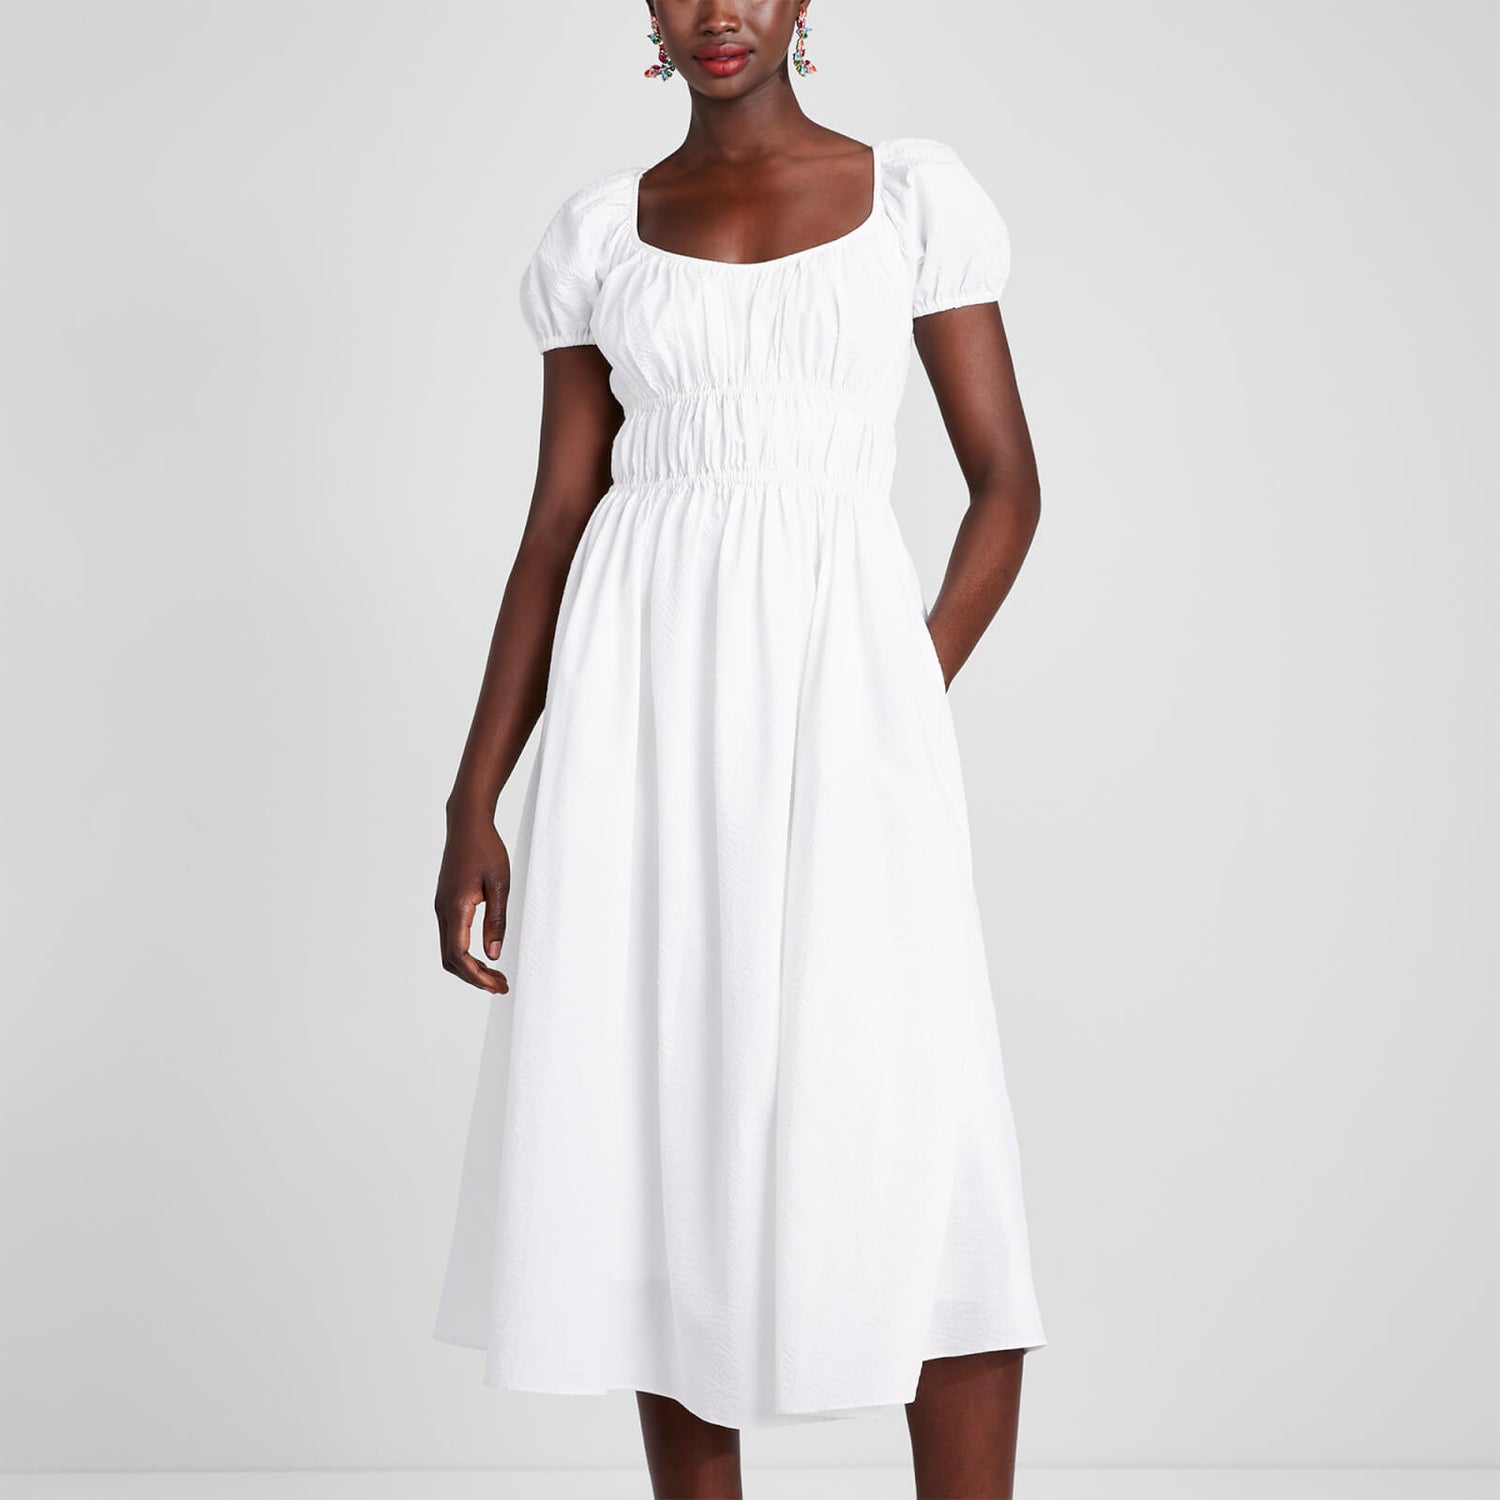 Kate Spade New York Women's Seersucker Puff Sleeve Dress - White - XS